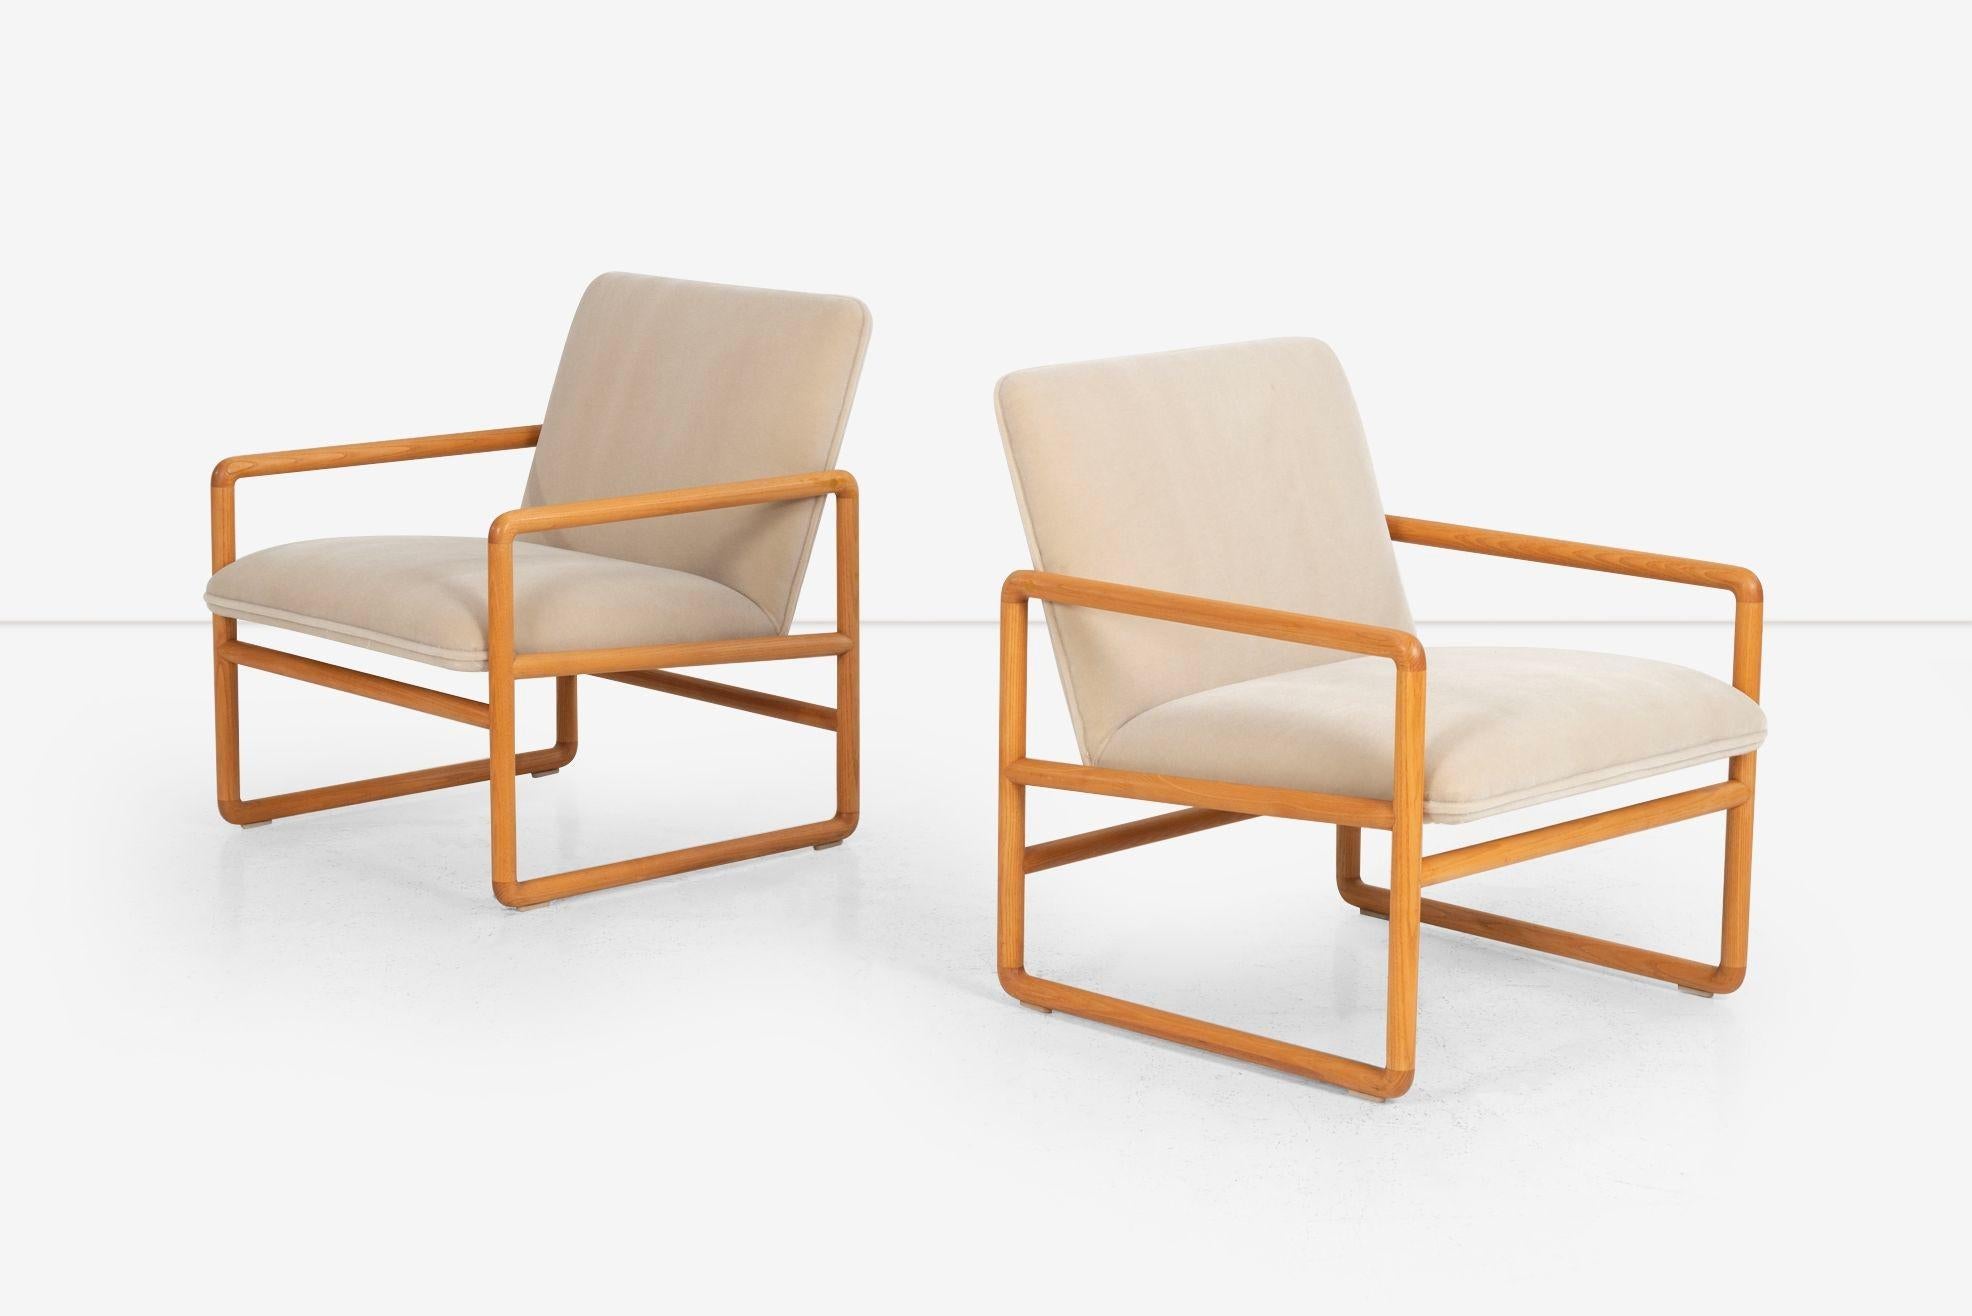 American Ward Bennett Lounge Chairs in Solid Oak for Brickel Associates 1965c. For Sale